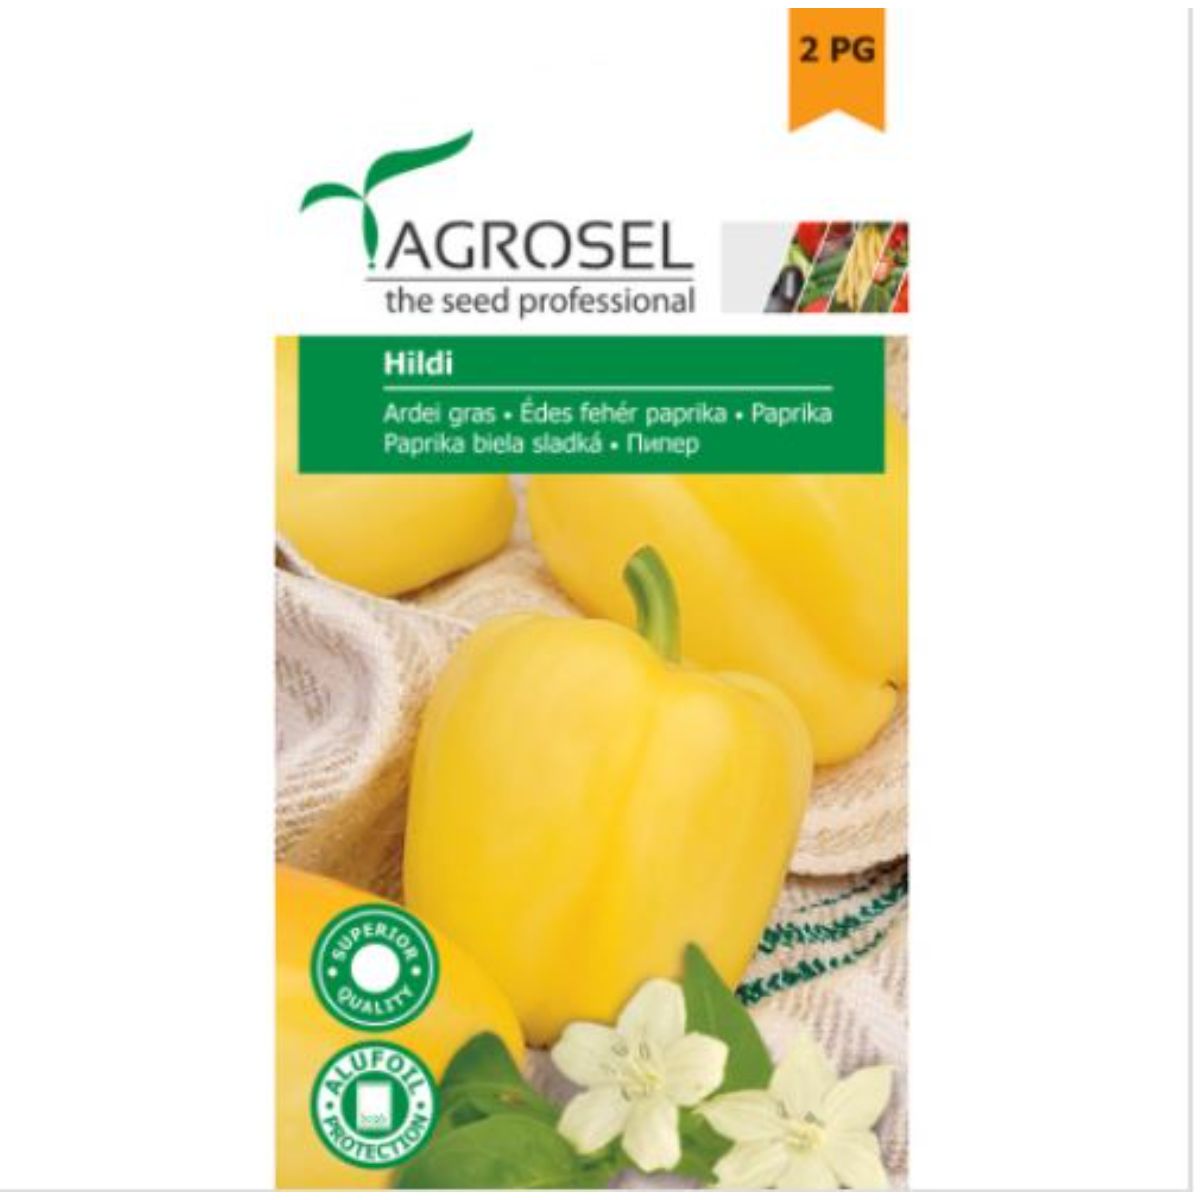 Ardei - Seminte Ardei gras Hildi Agrosel 0.8 g, hectarul.ro